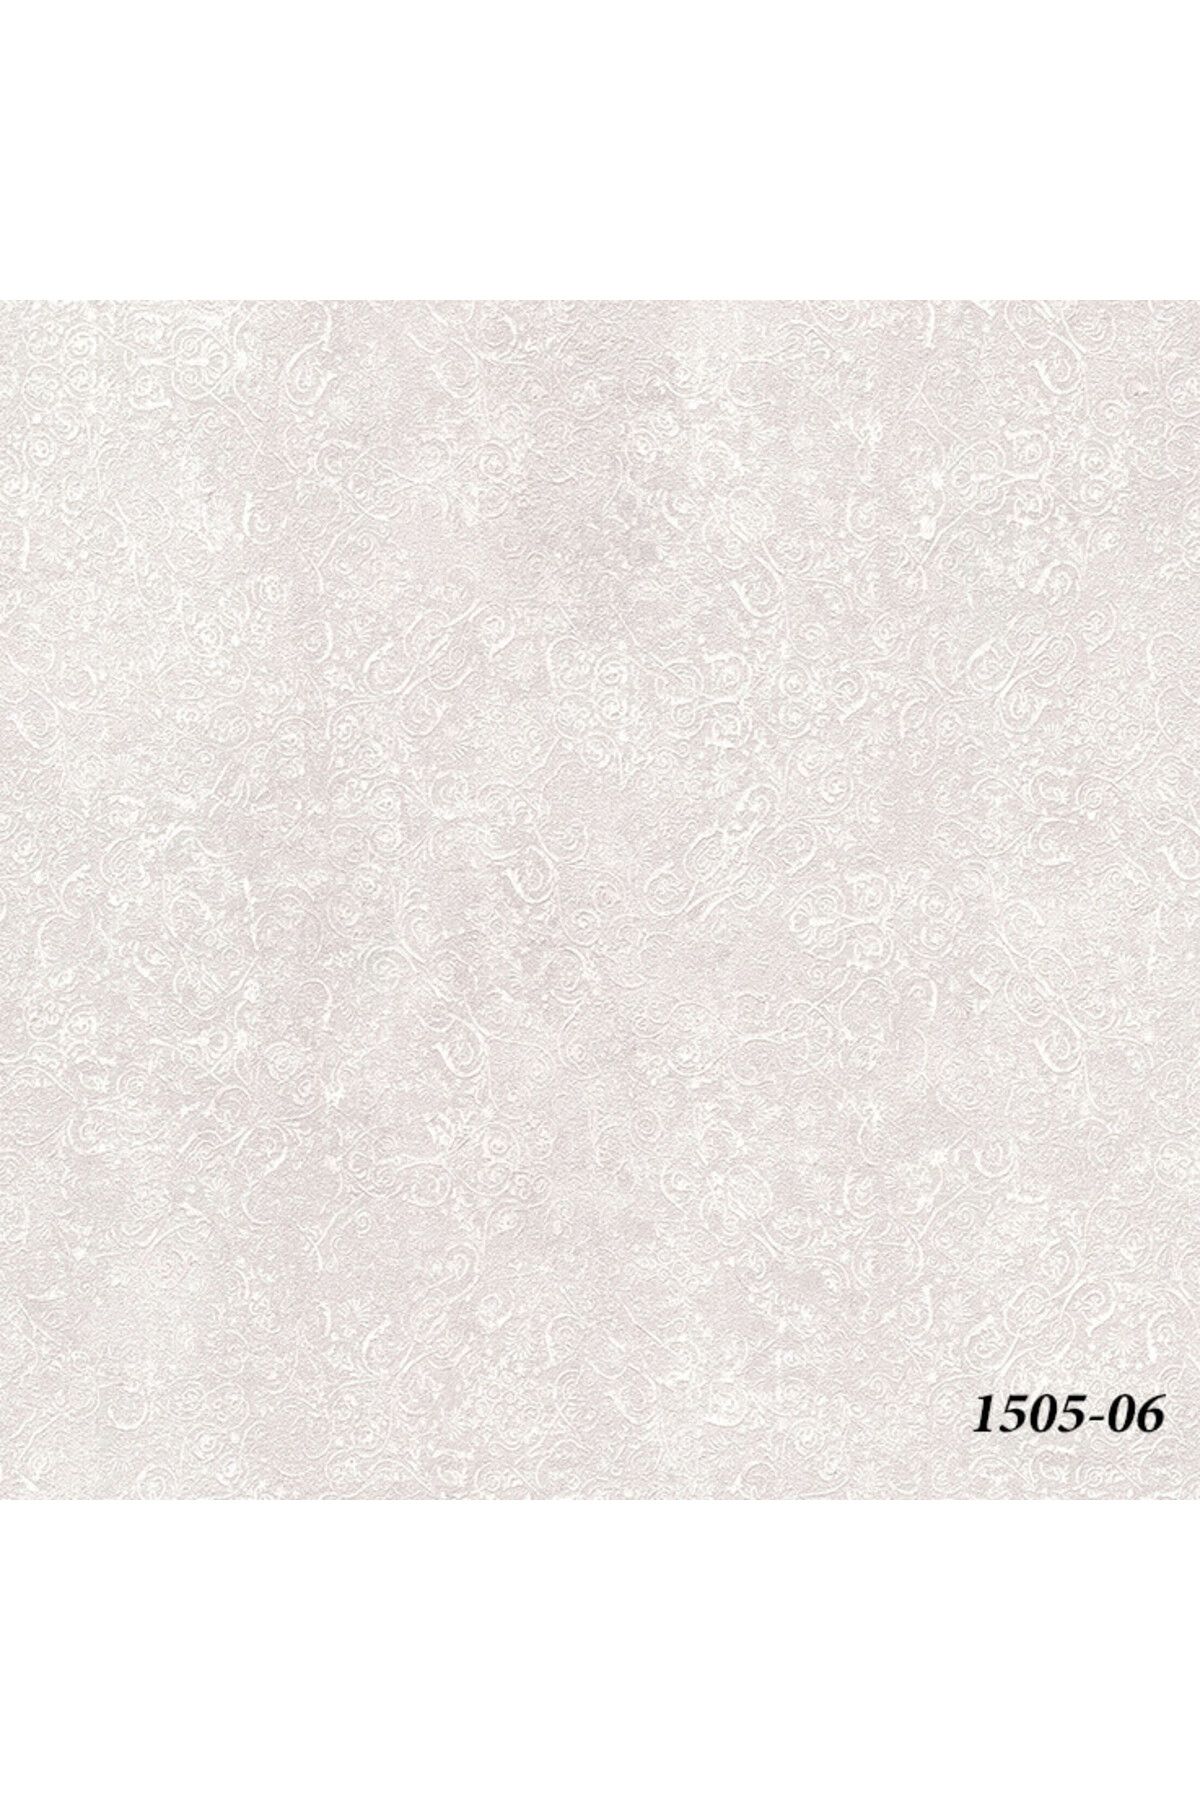 Decowall Orlando 1505-06 Retro Duvar Kağıdı